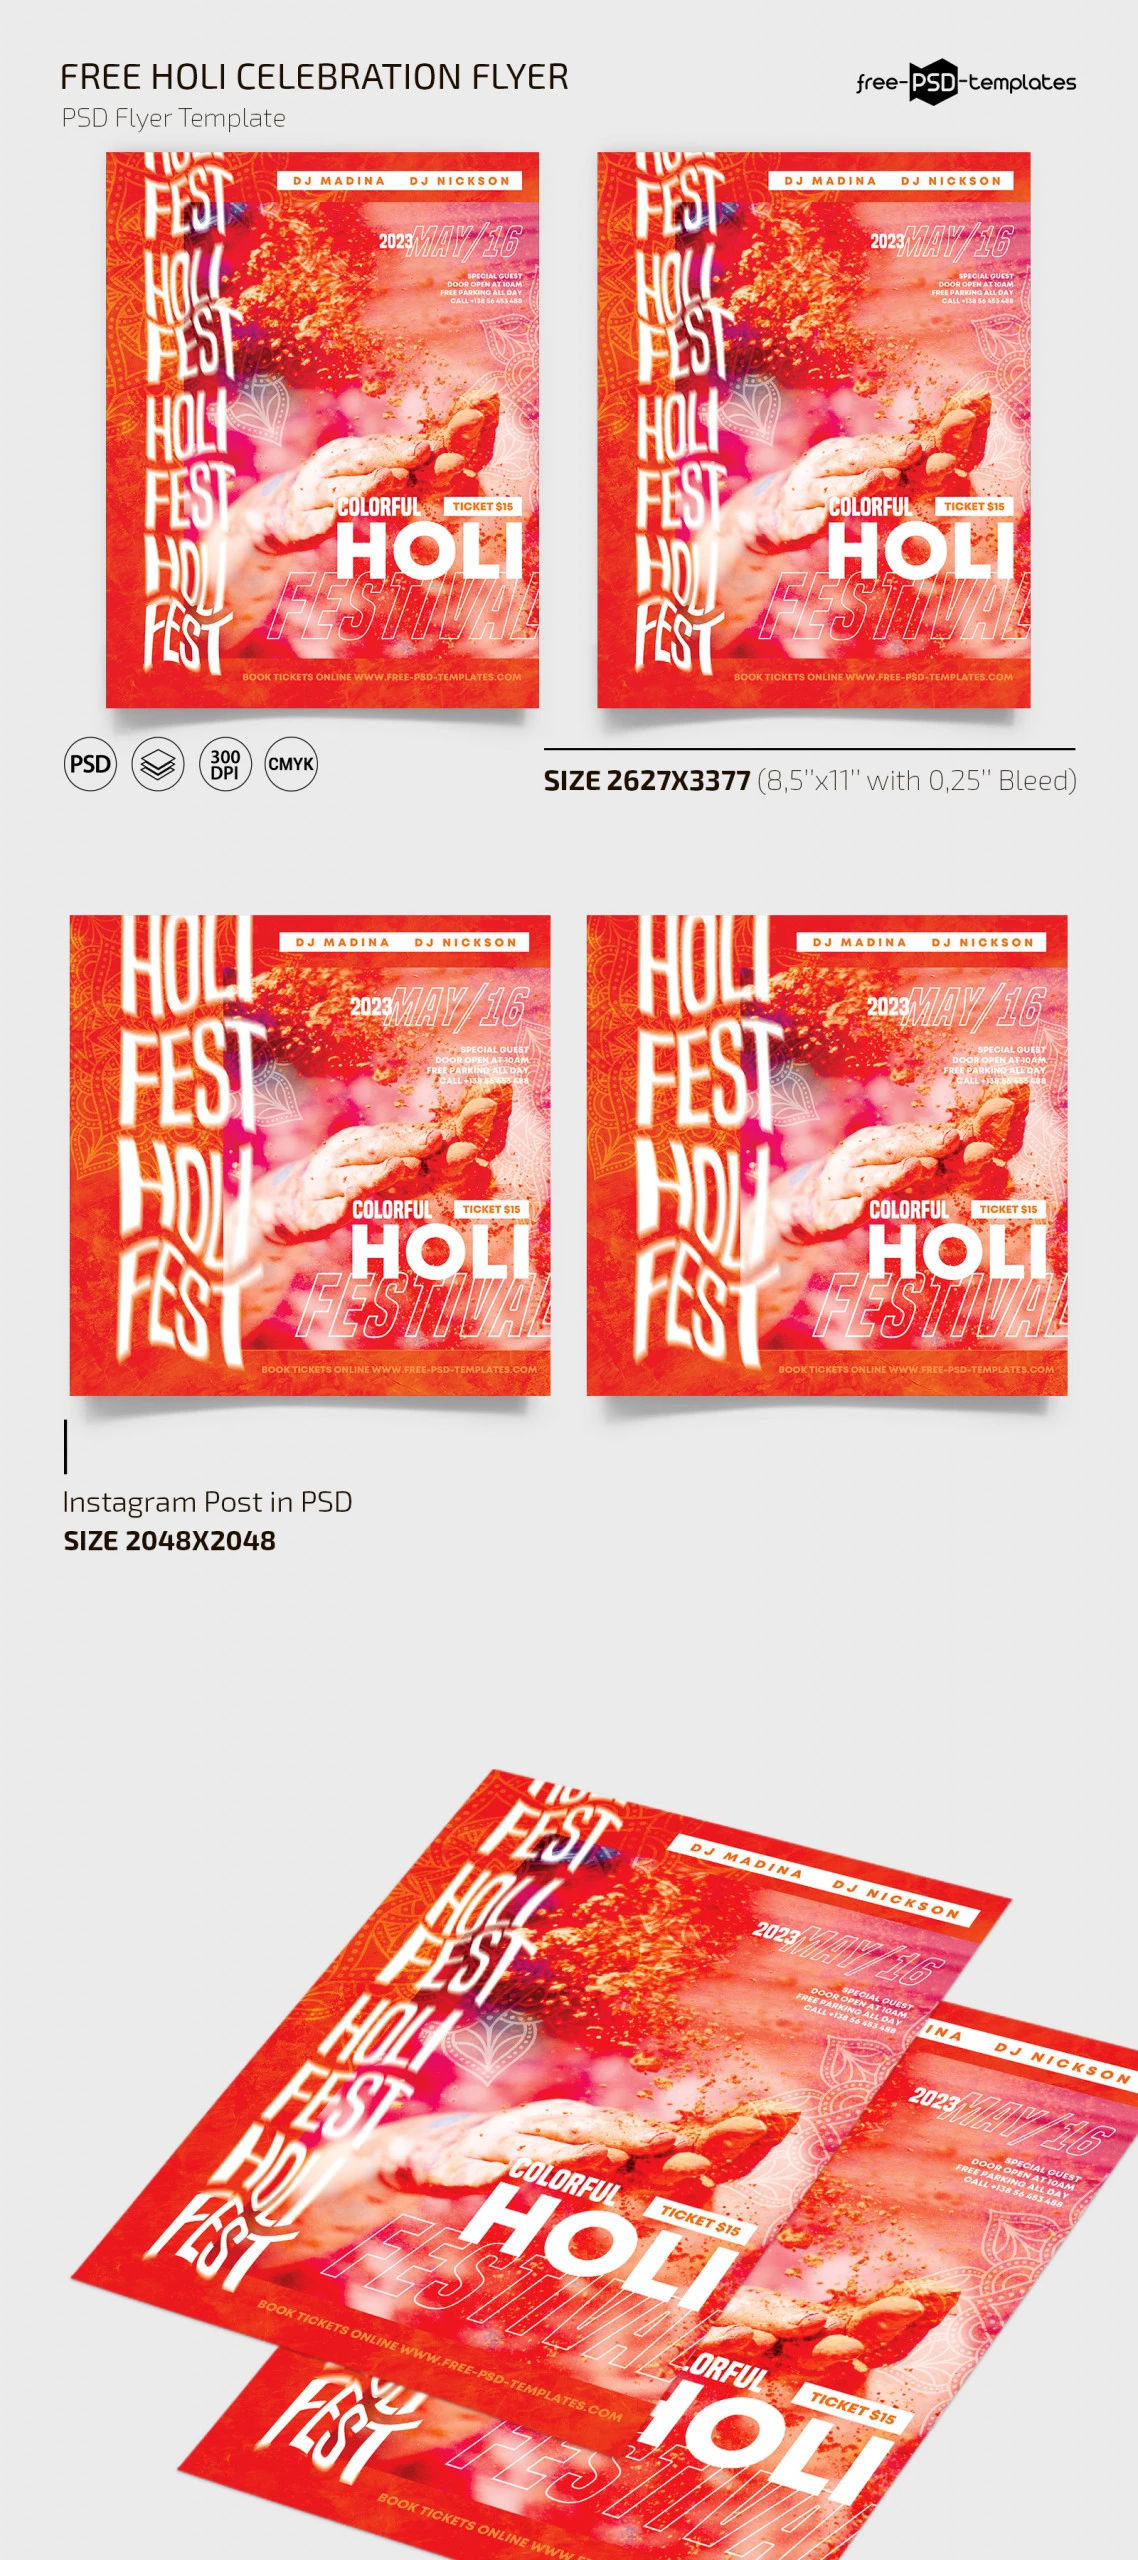 Free Holi Celebration Flyer Template + Instagram Post (PSD)